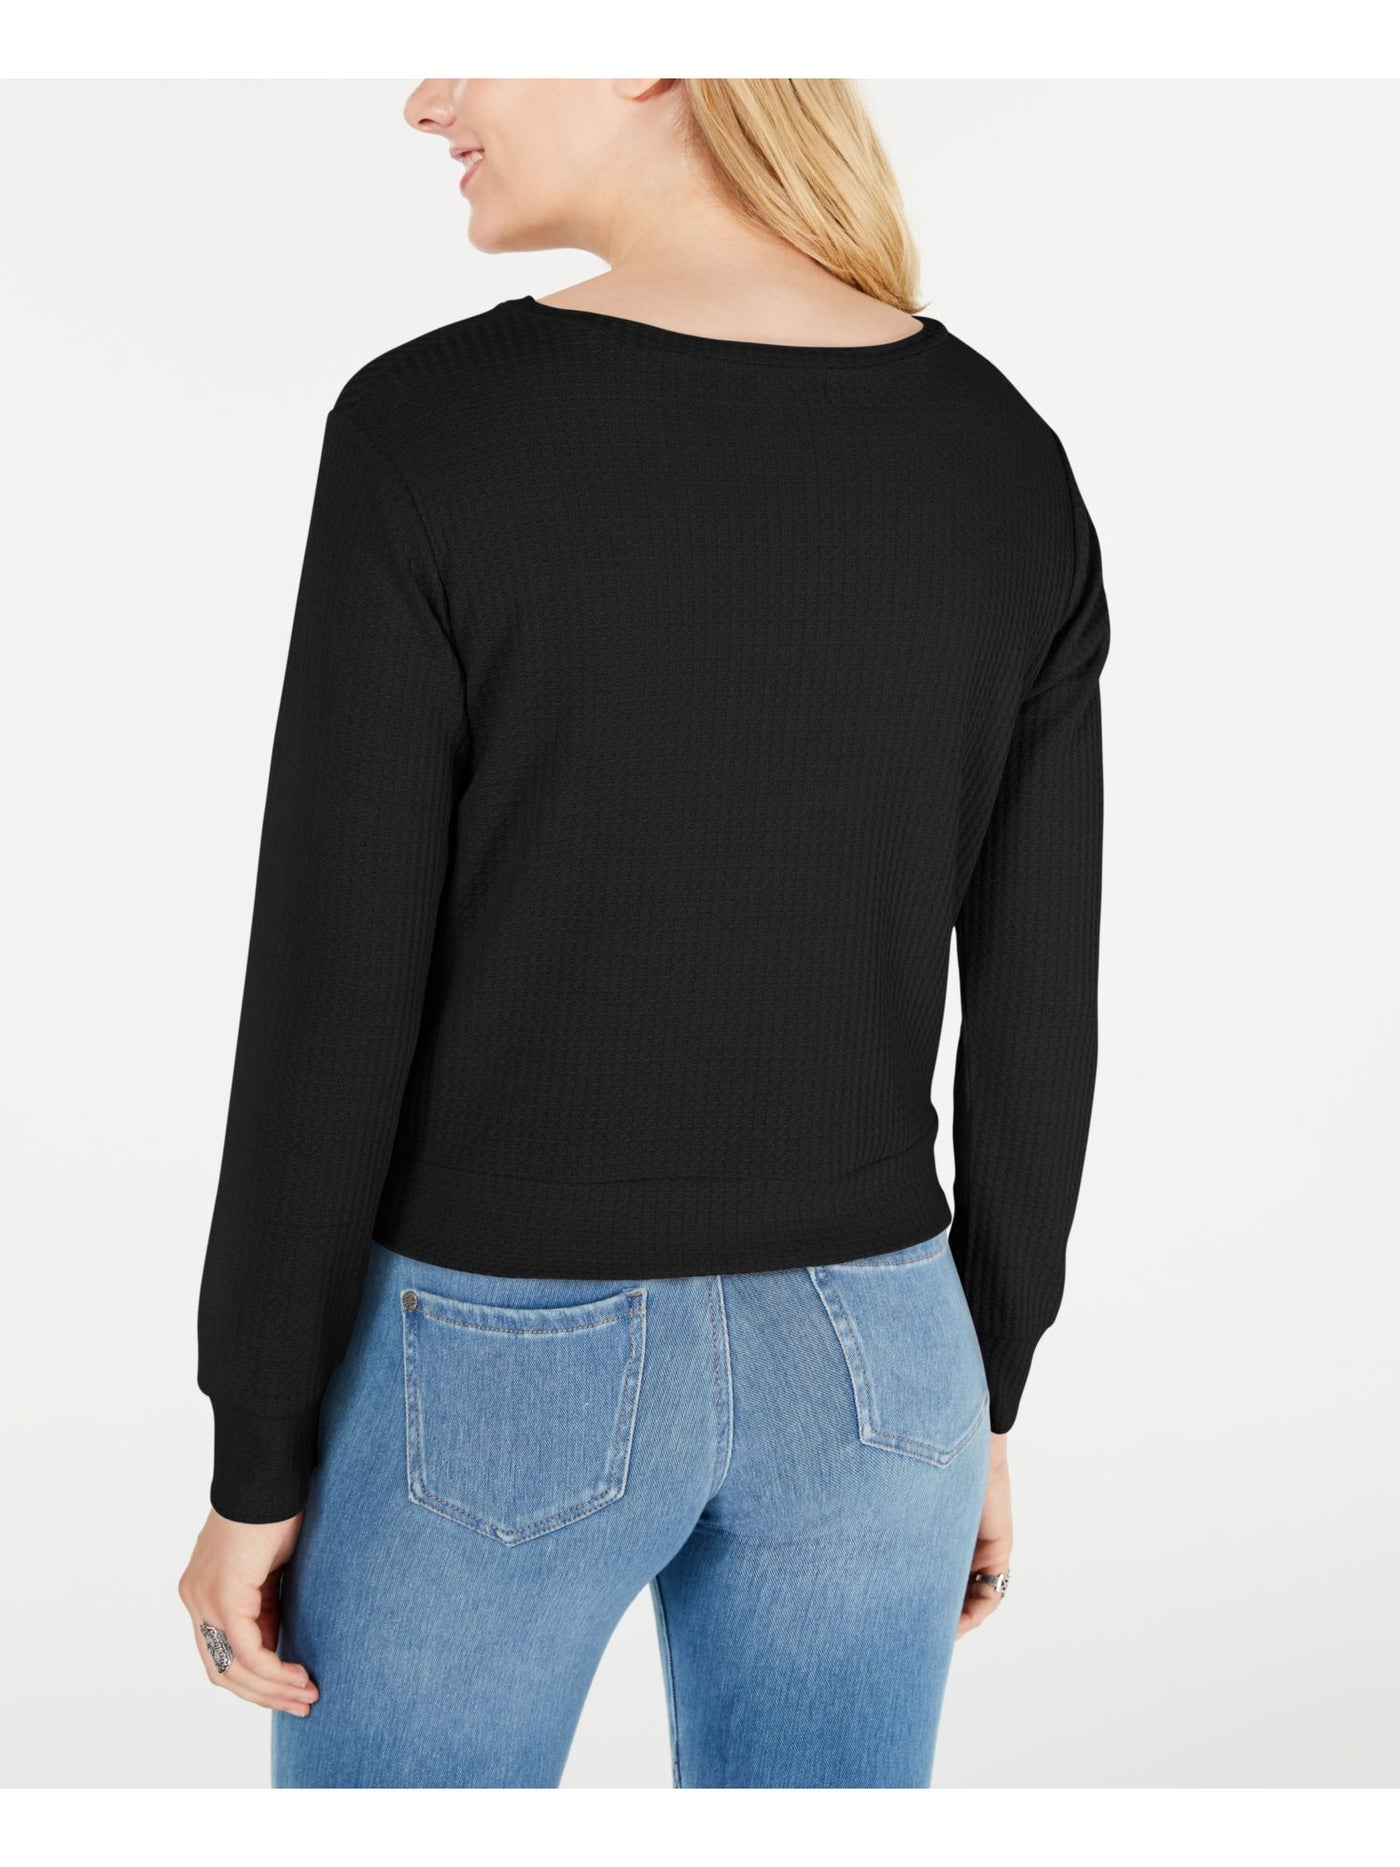 GYPSIES & MOONDUST Womens Black Long Sleeve Crew Neck Sweater Juniors S